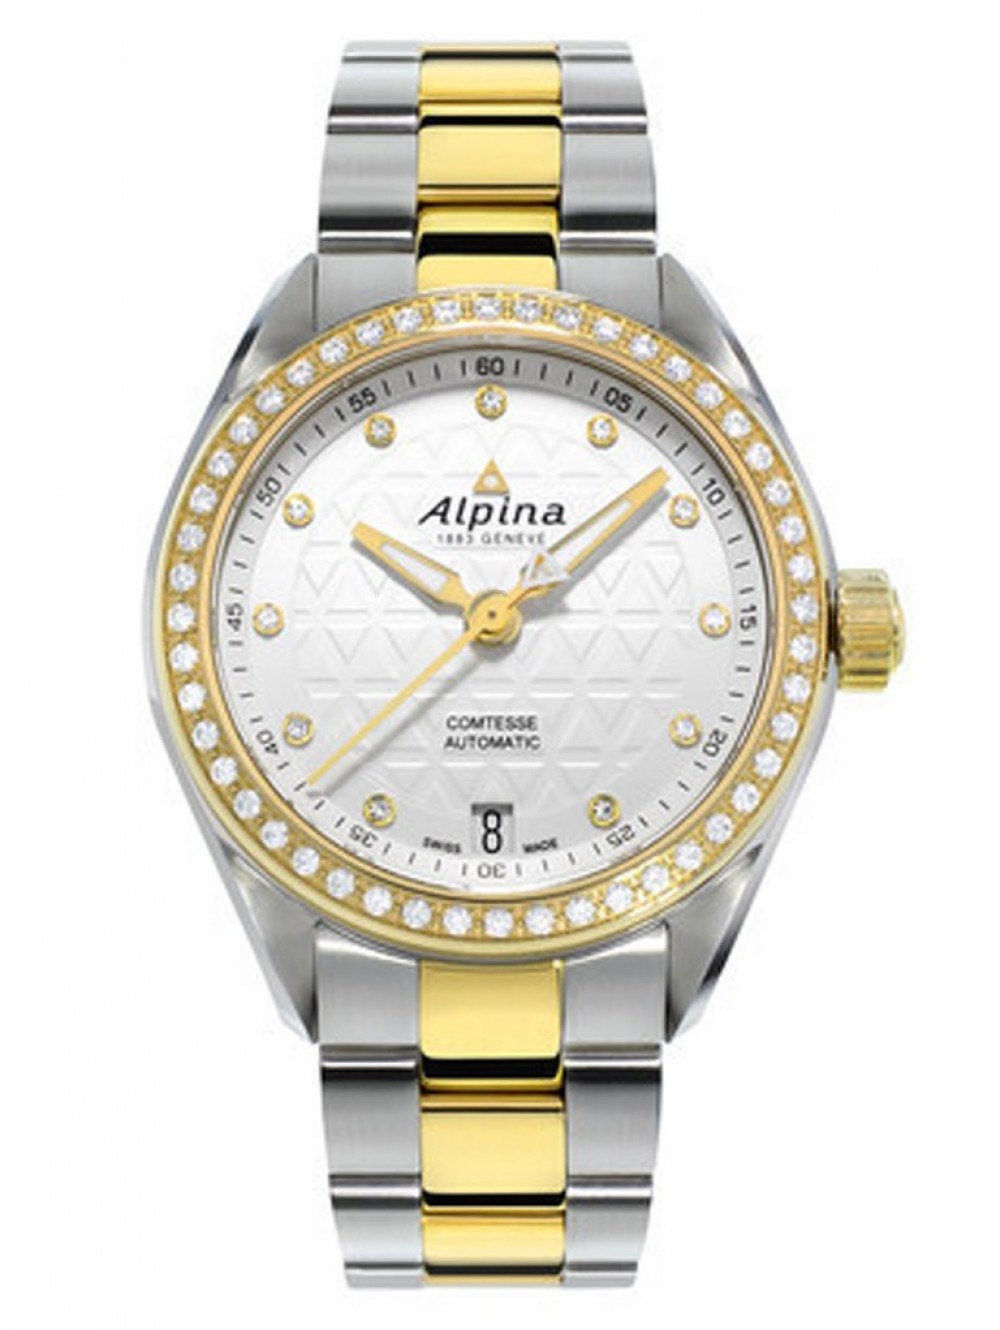 Zegarek firmy Alpina Genève, model Comtesse Automatic